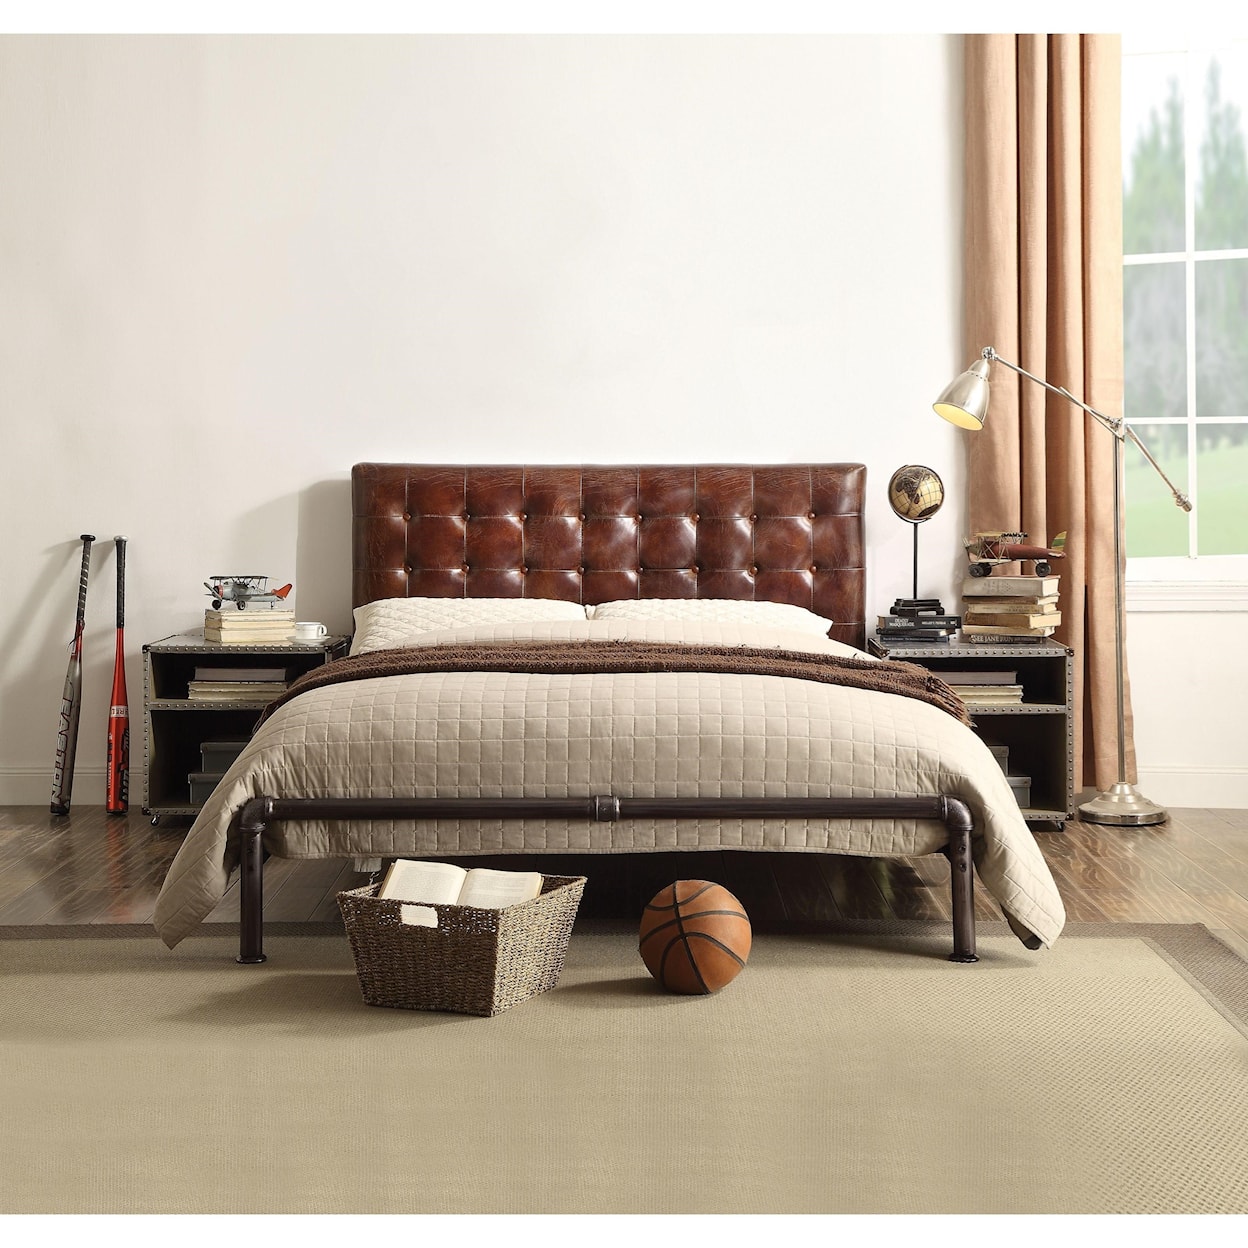 Acme Furniture Brancaster Queen Bed